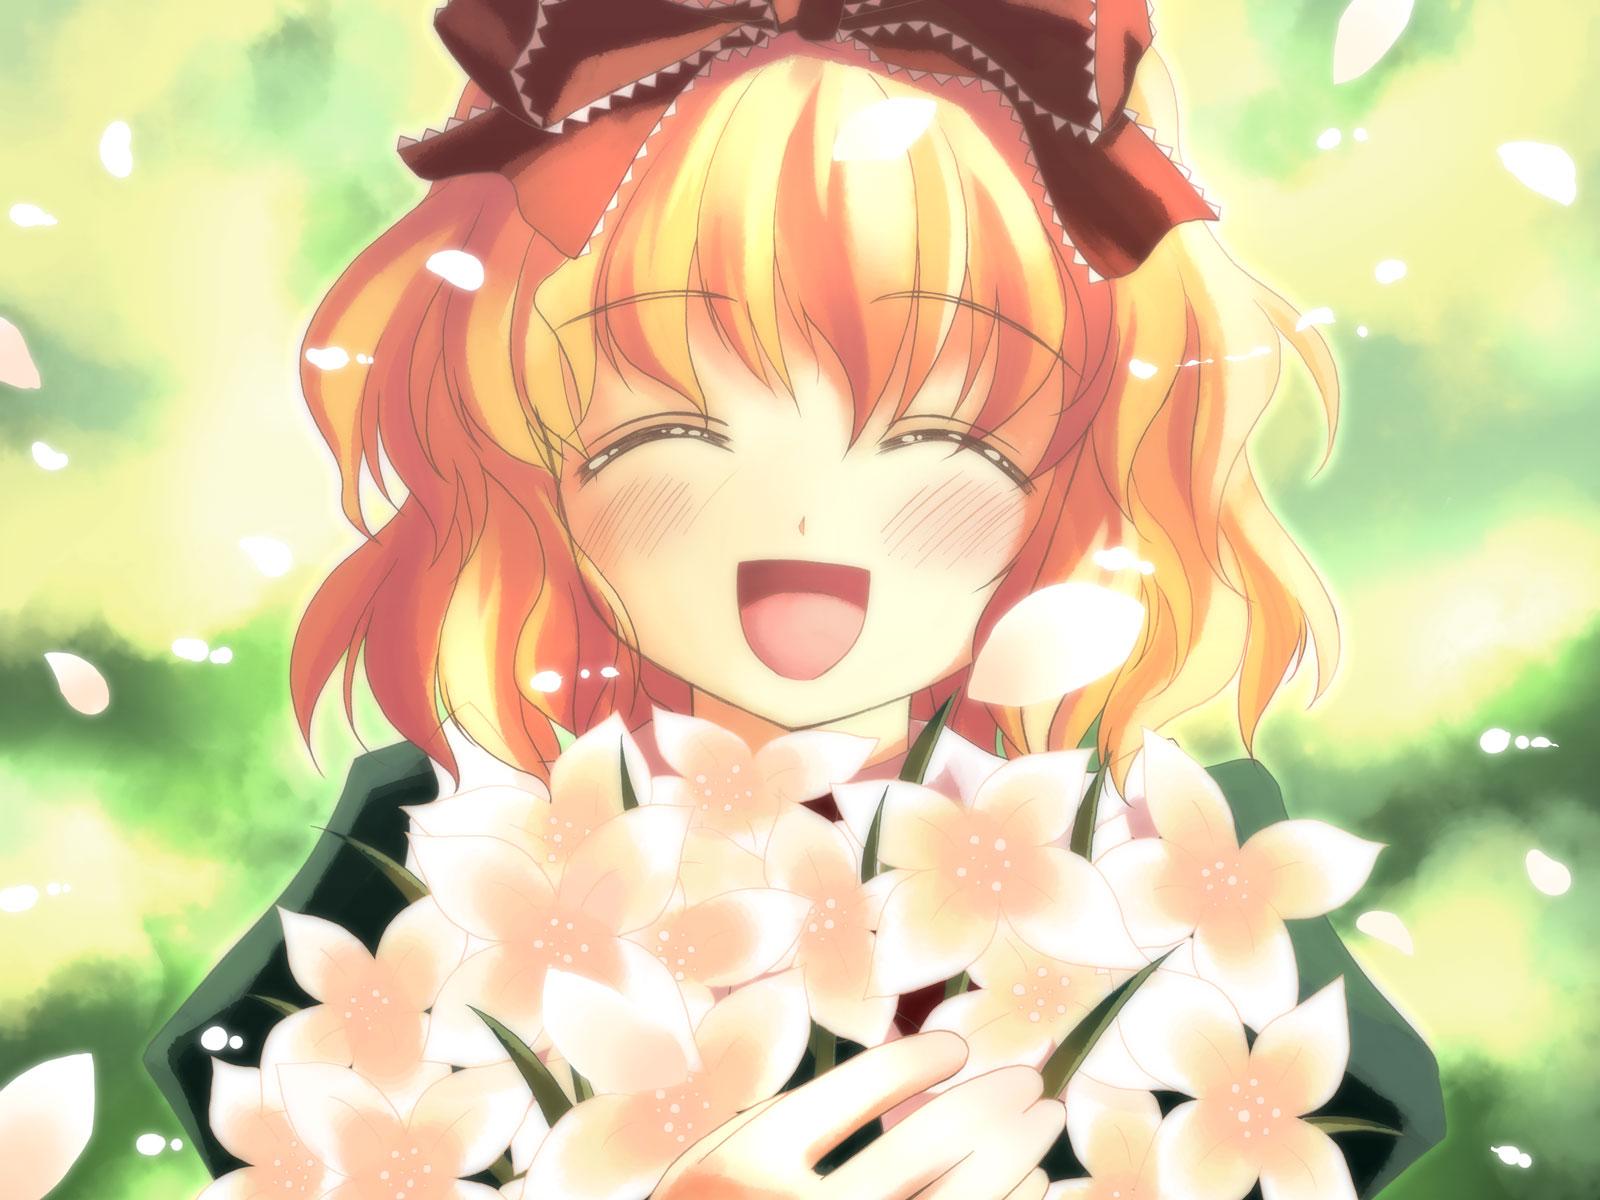 blondes, Touhou, flowers, happy, anime, flower petals, Medicine